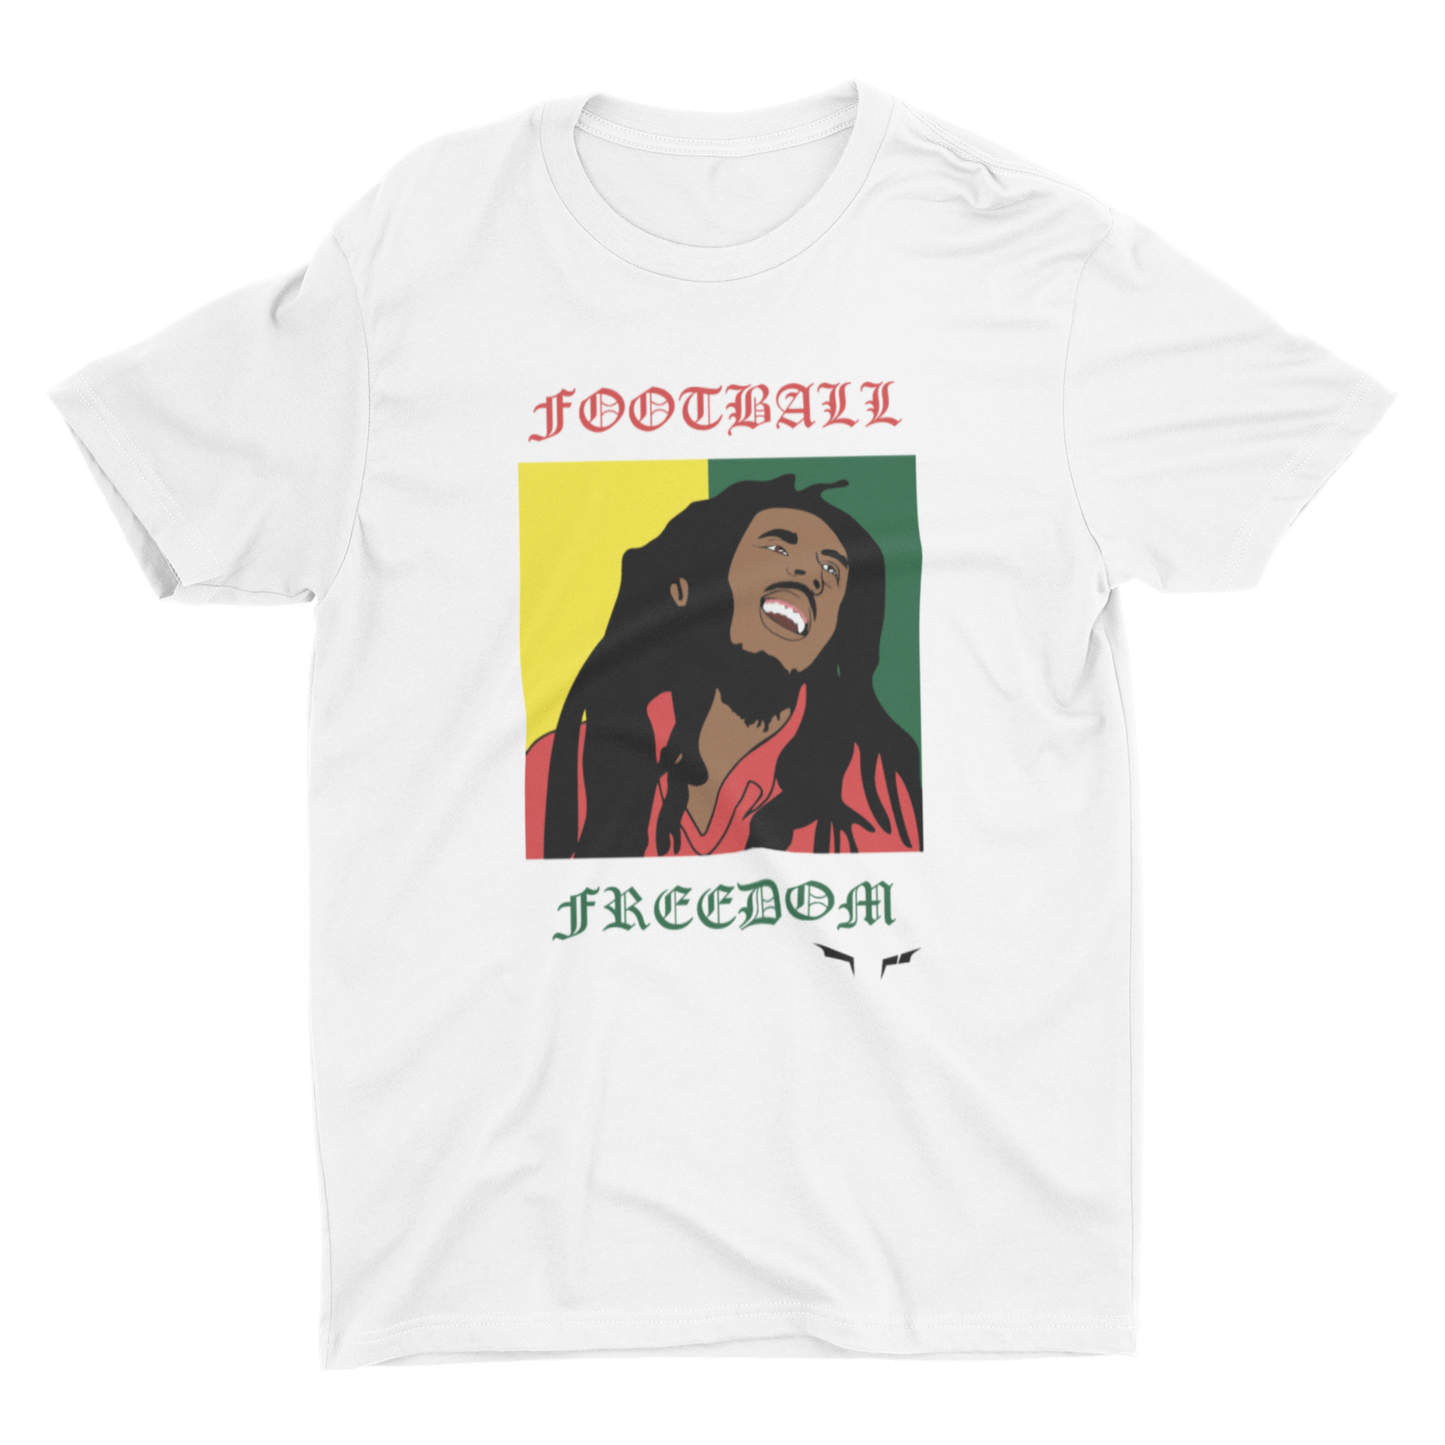 Ultras - Marley Football is Freedom T-shirt